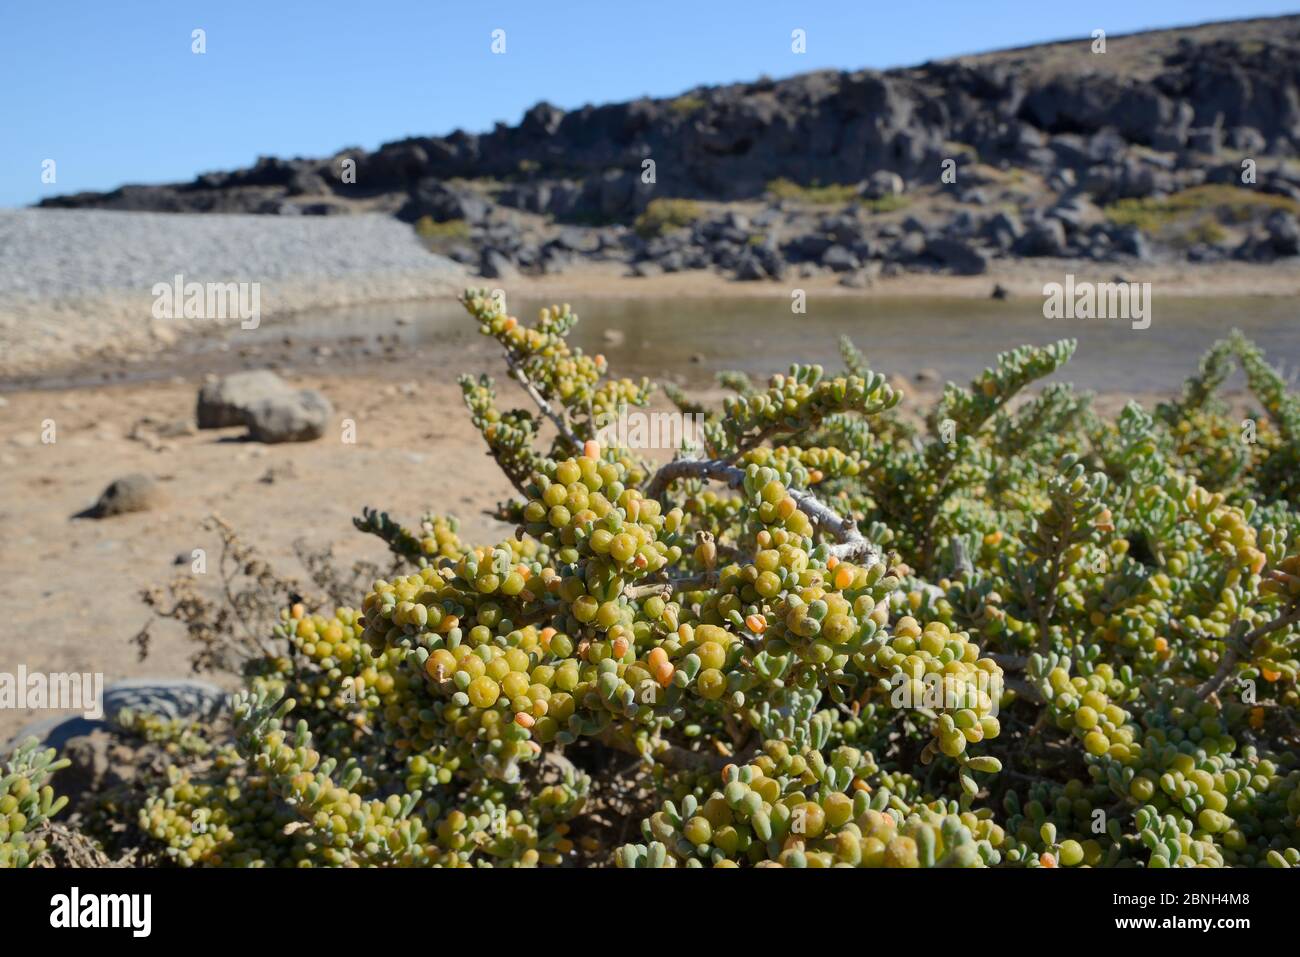 Sea grape (Zygophyllum / Tetraena fontanesii) bush with developing fruits on the margin of a sandy coastal lagoon, Tenerife, May. Stock Photo